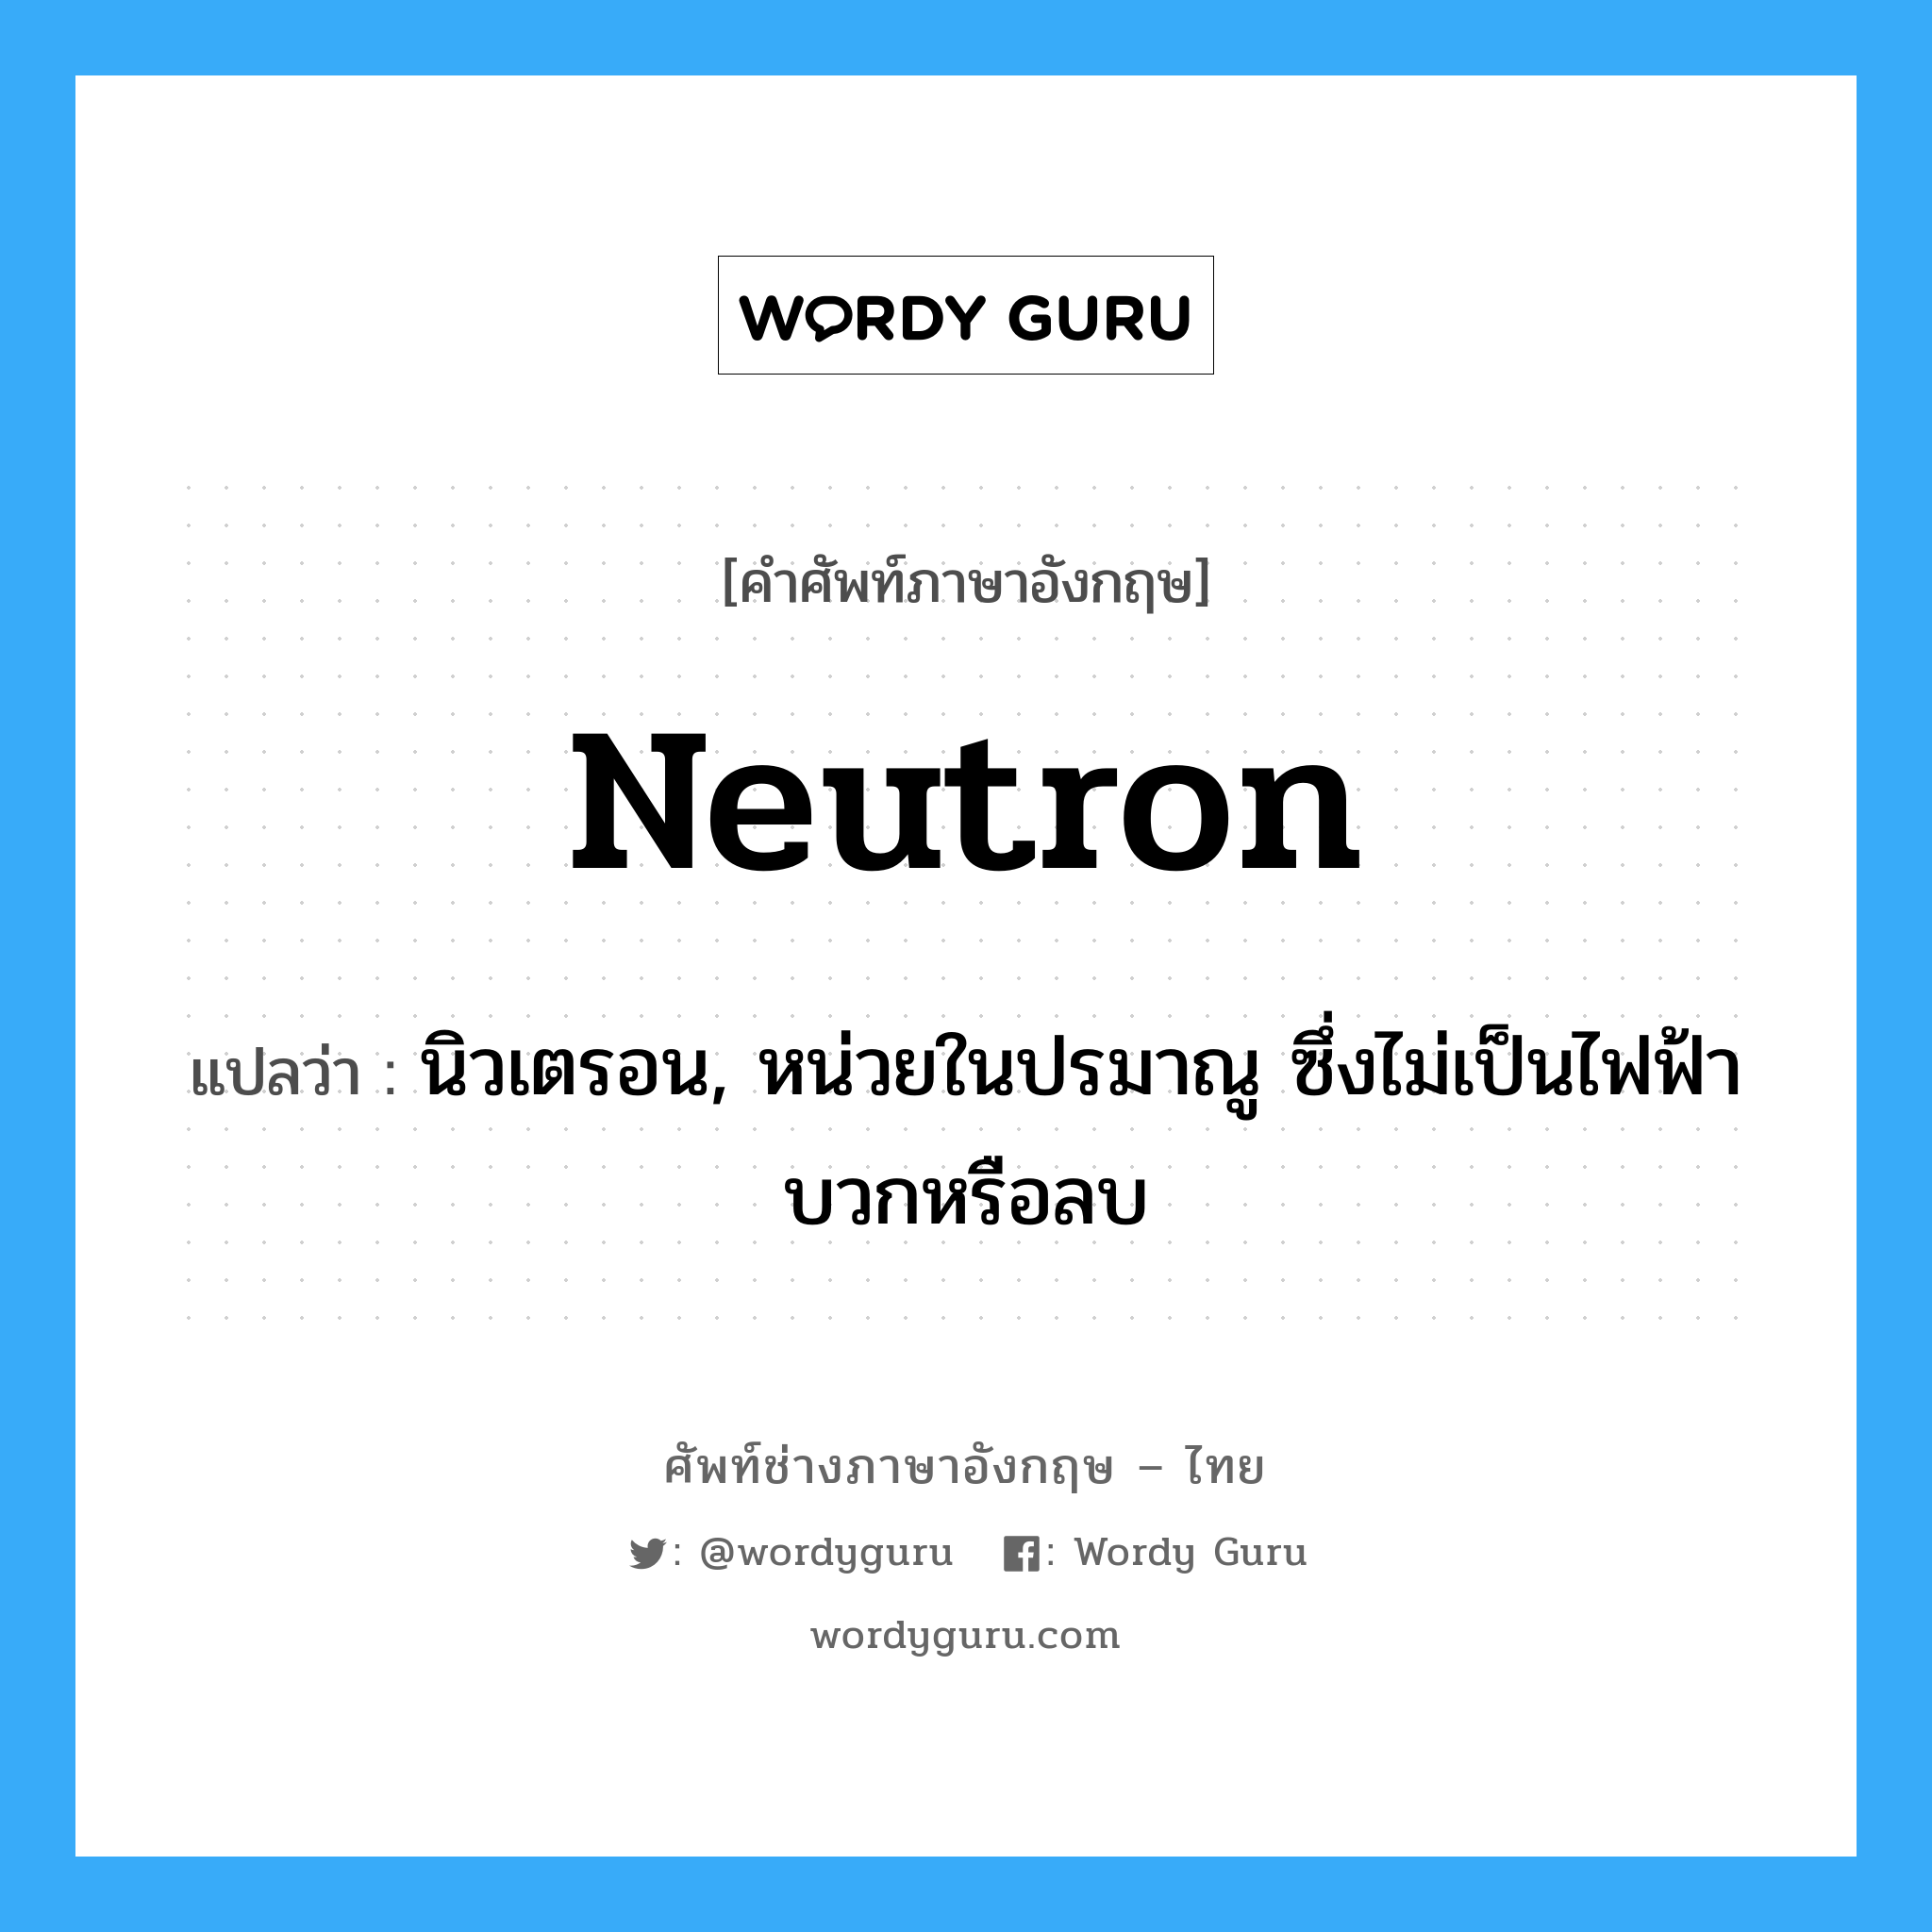 neutron แปลว่า?, คำศัพท์ช่างภาษาอังกฤษ - ไทย neutron คำศัพท์ภาษาอังกฤษ neutron แปลว่า นิวเตรอน, หน่วยในปรมาณู ซึ่งไม่เป็นไฟฟ้าบวกหรือลบ